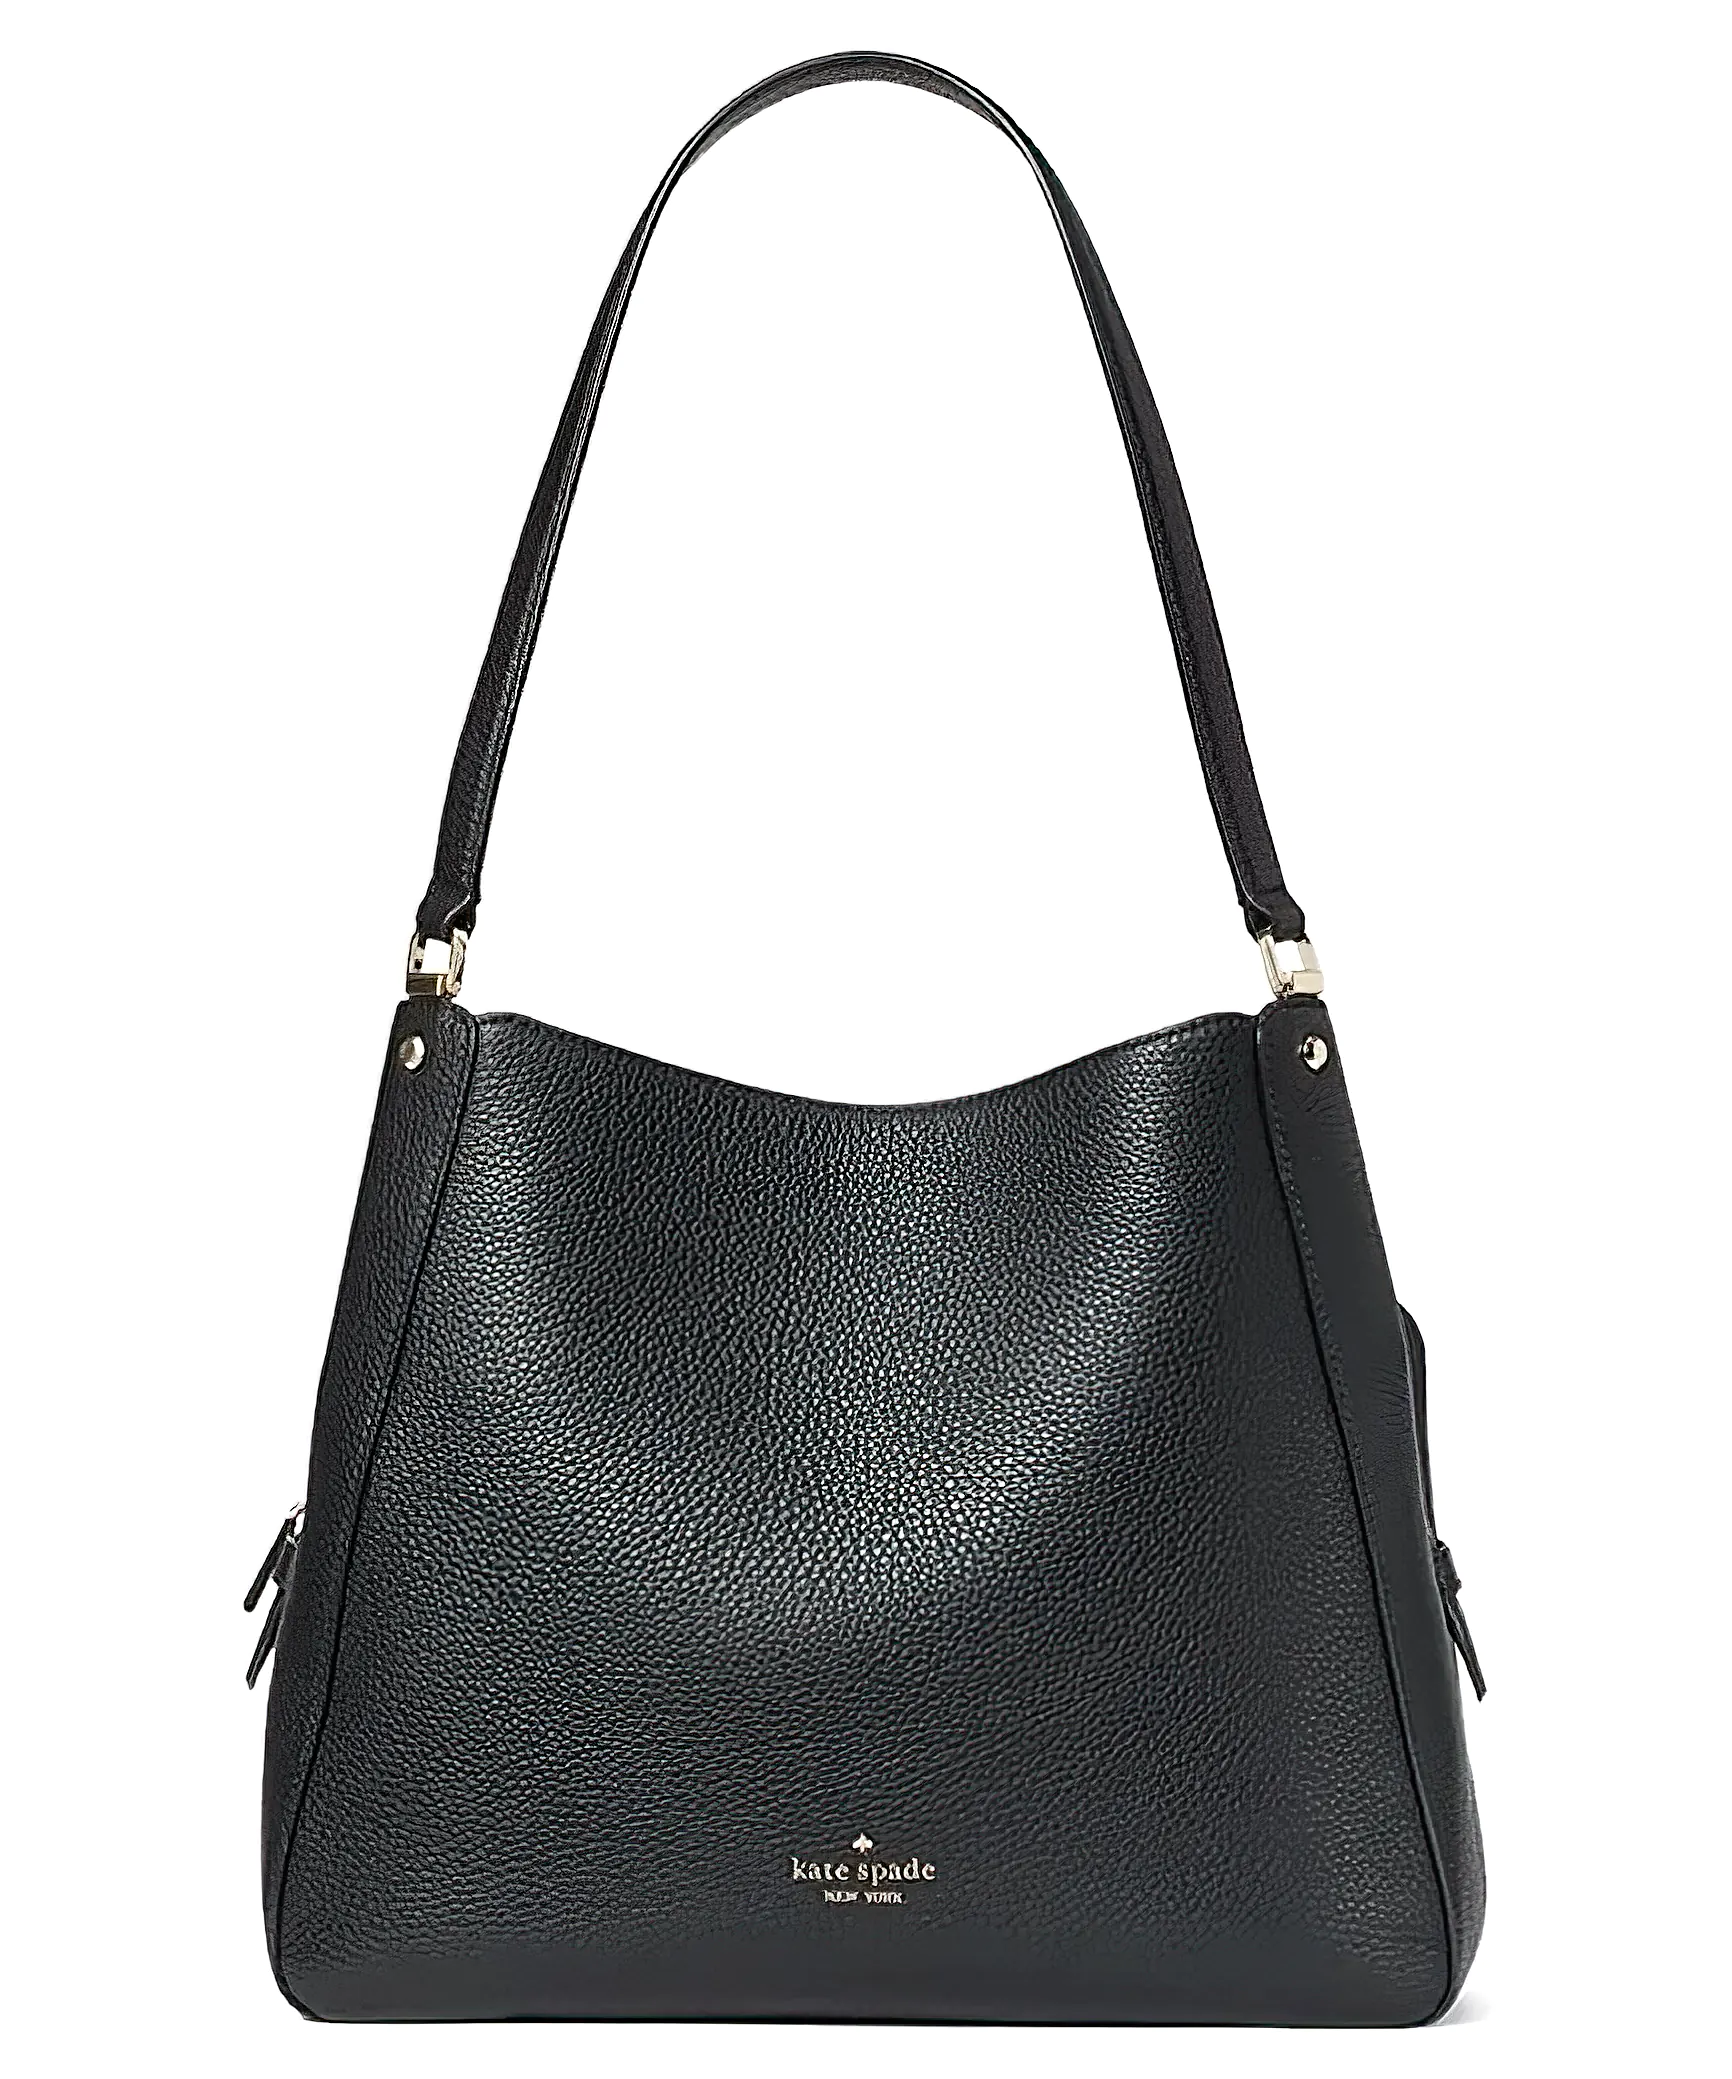 A stylish black leather shoulder bag from Kate Spade